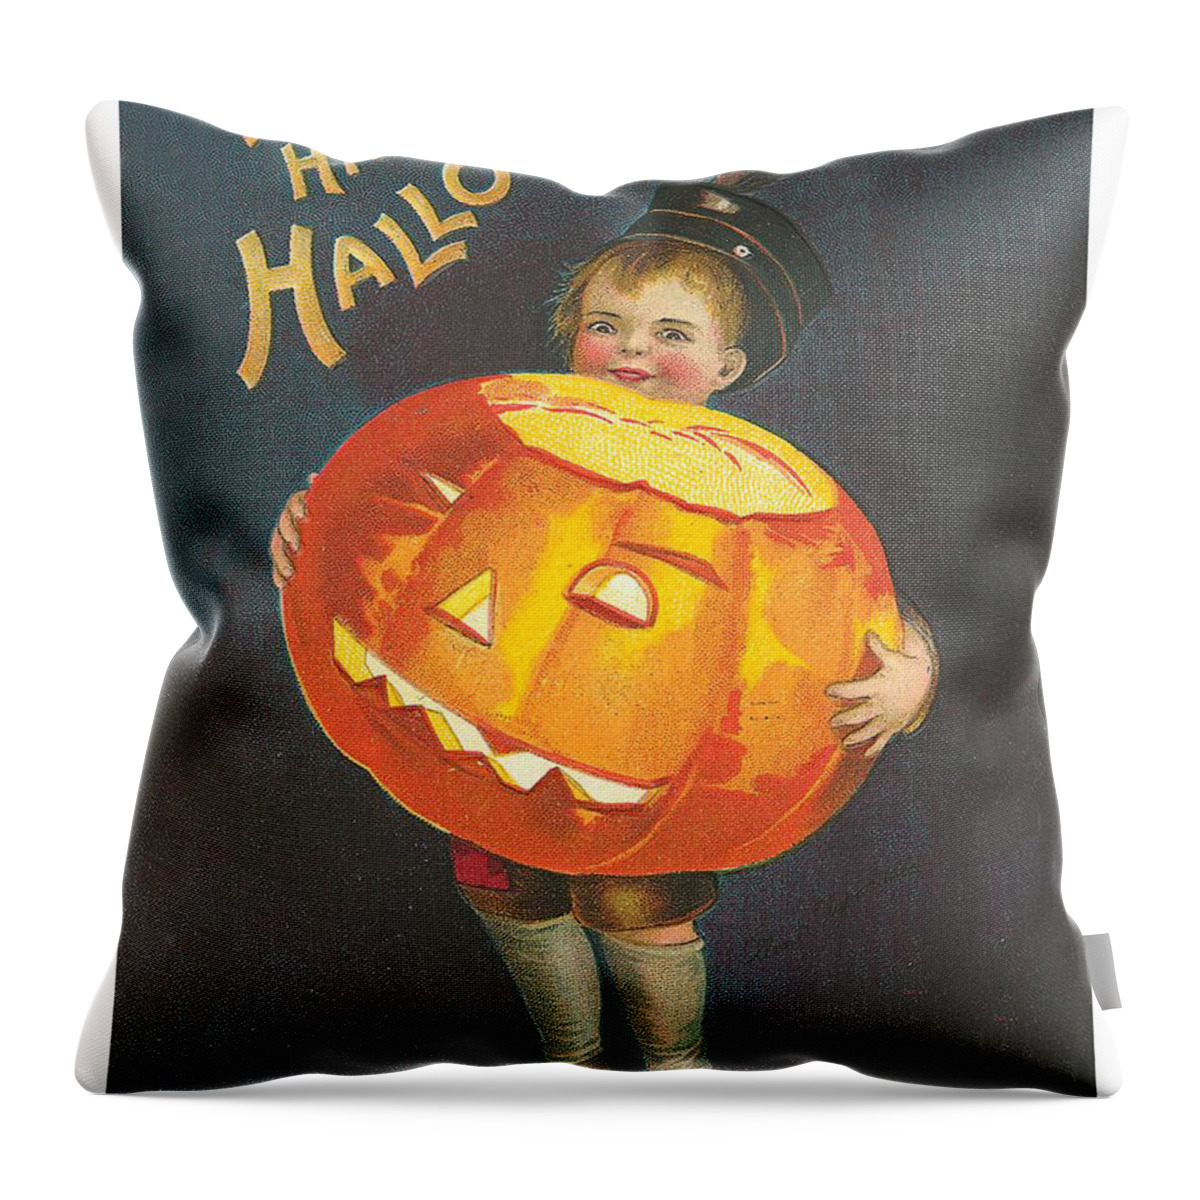 Boy Throw Pillow featuring the mixed media Boy with a big pumpkin by Long Shot